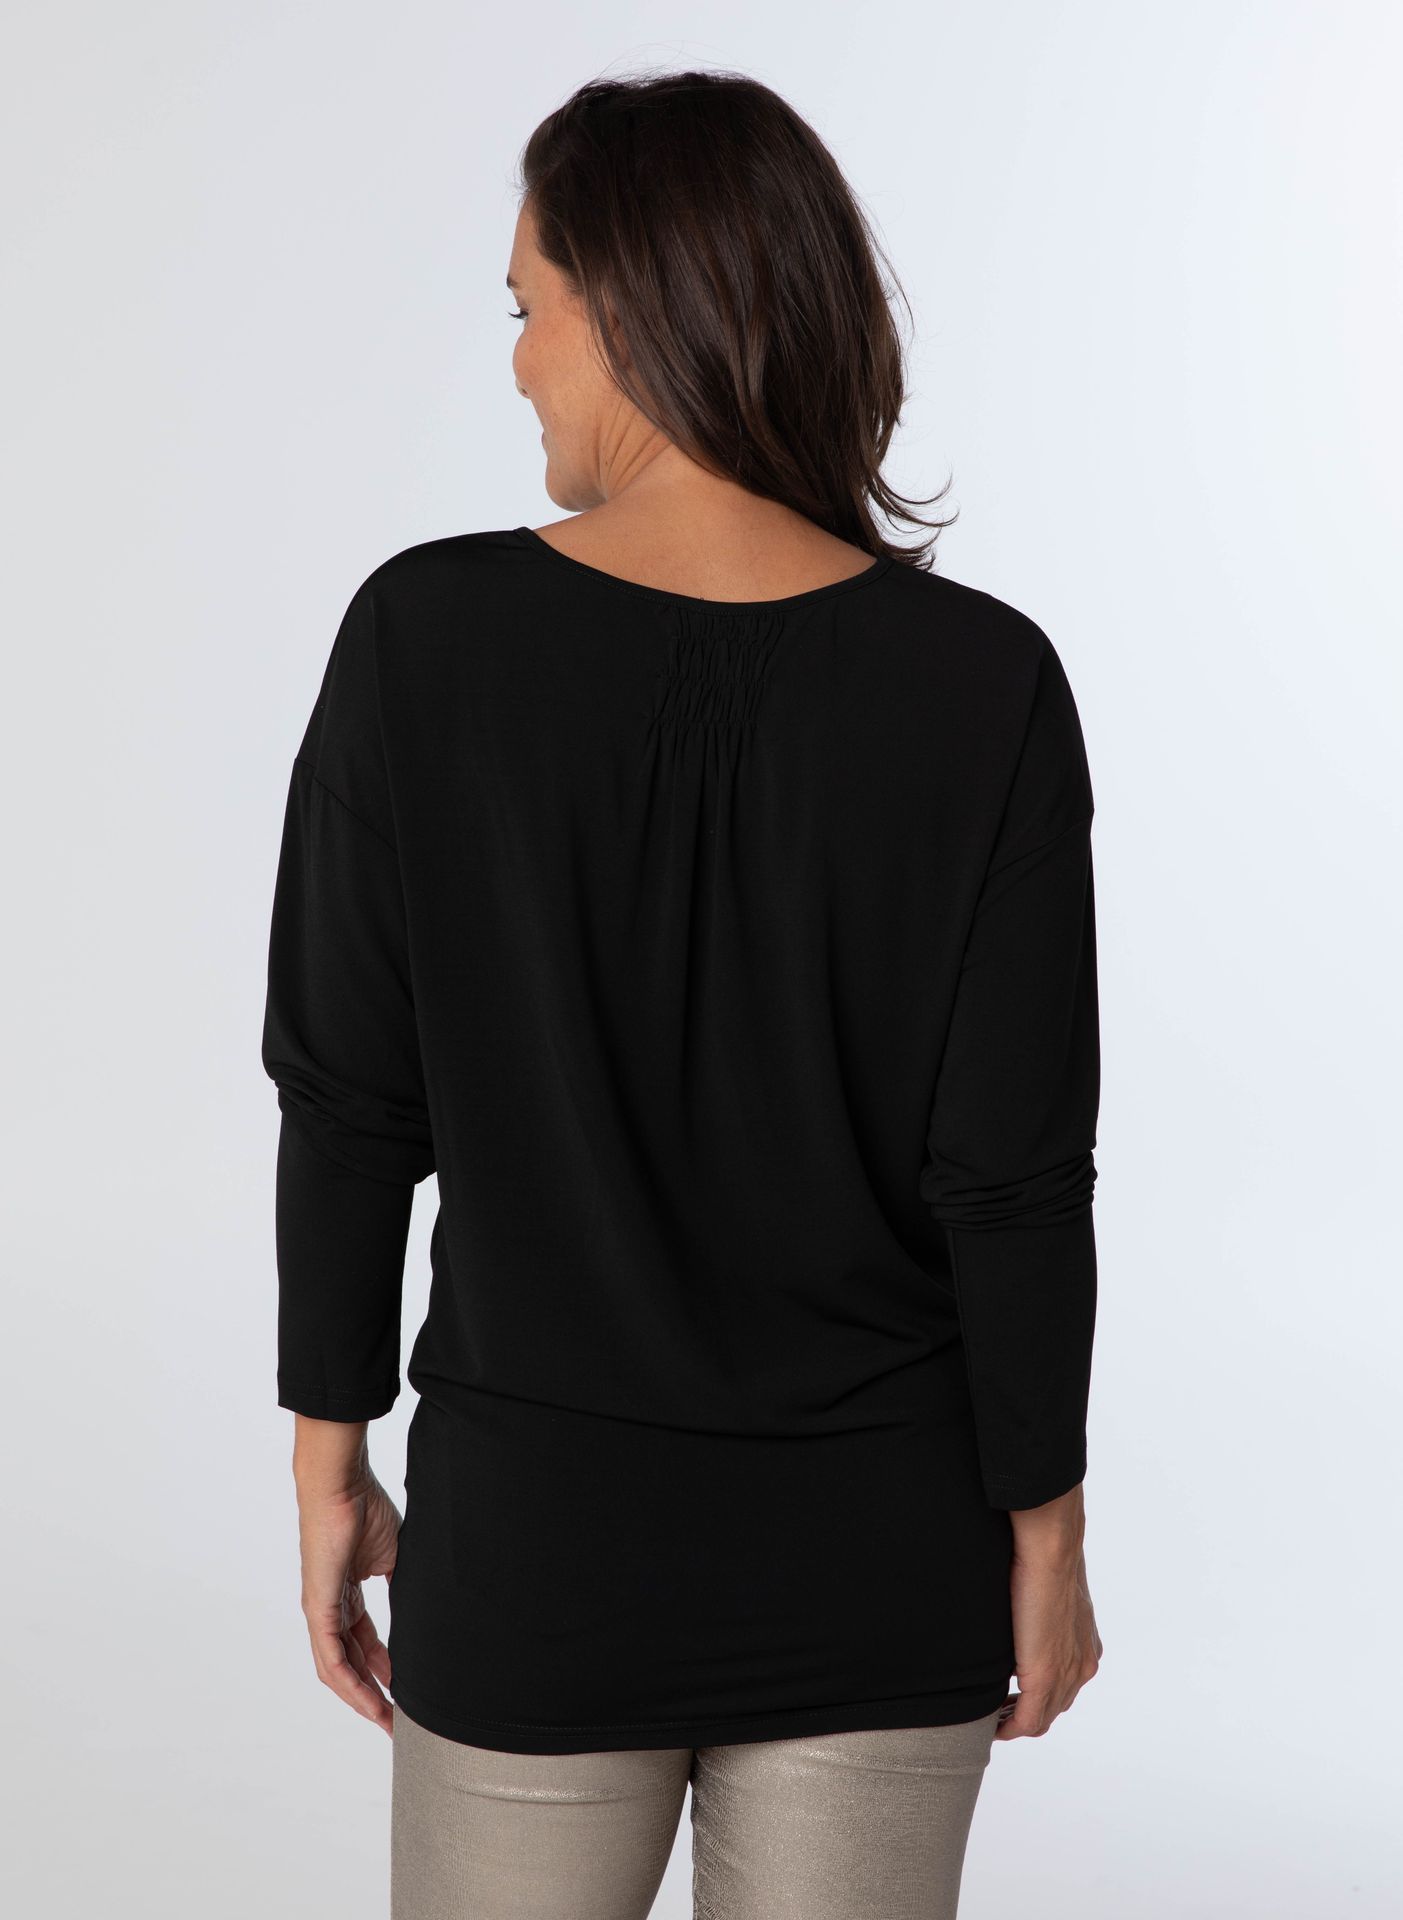 Norah Shirt zwart black 213337-001